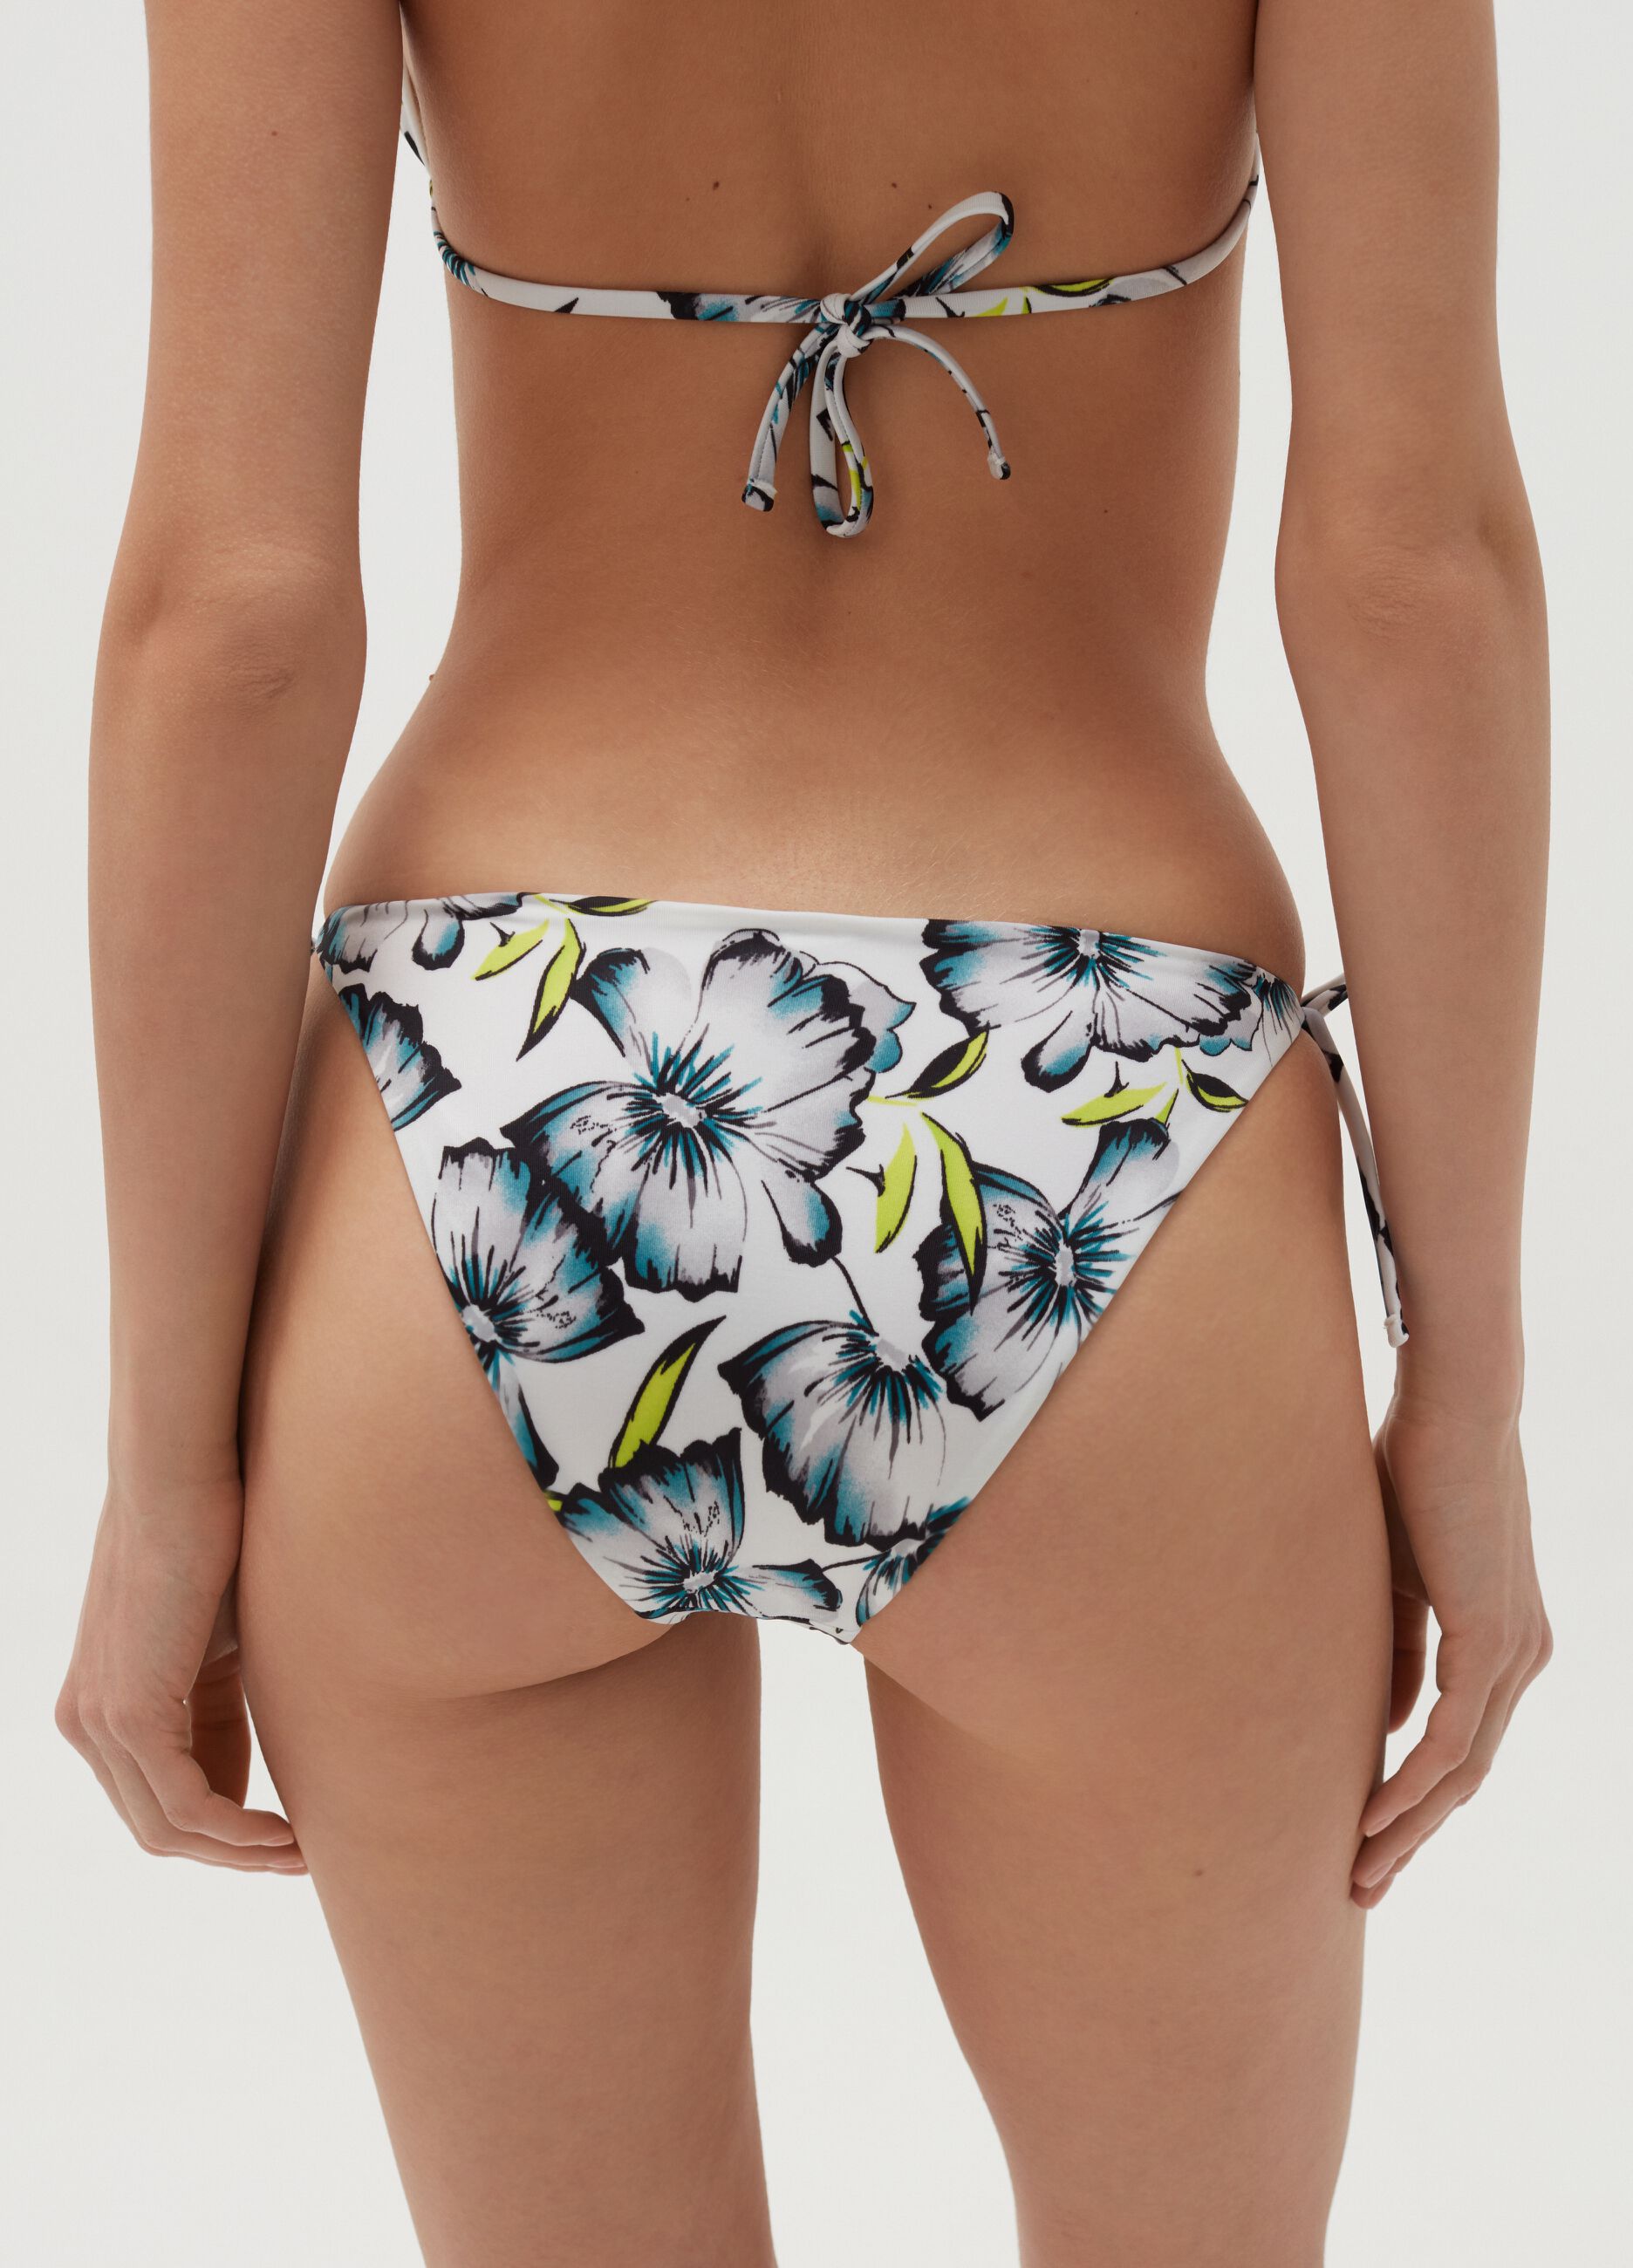 Floral bikini briefs